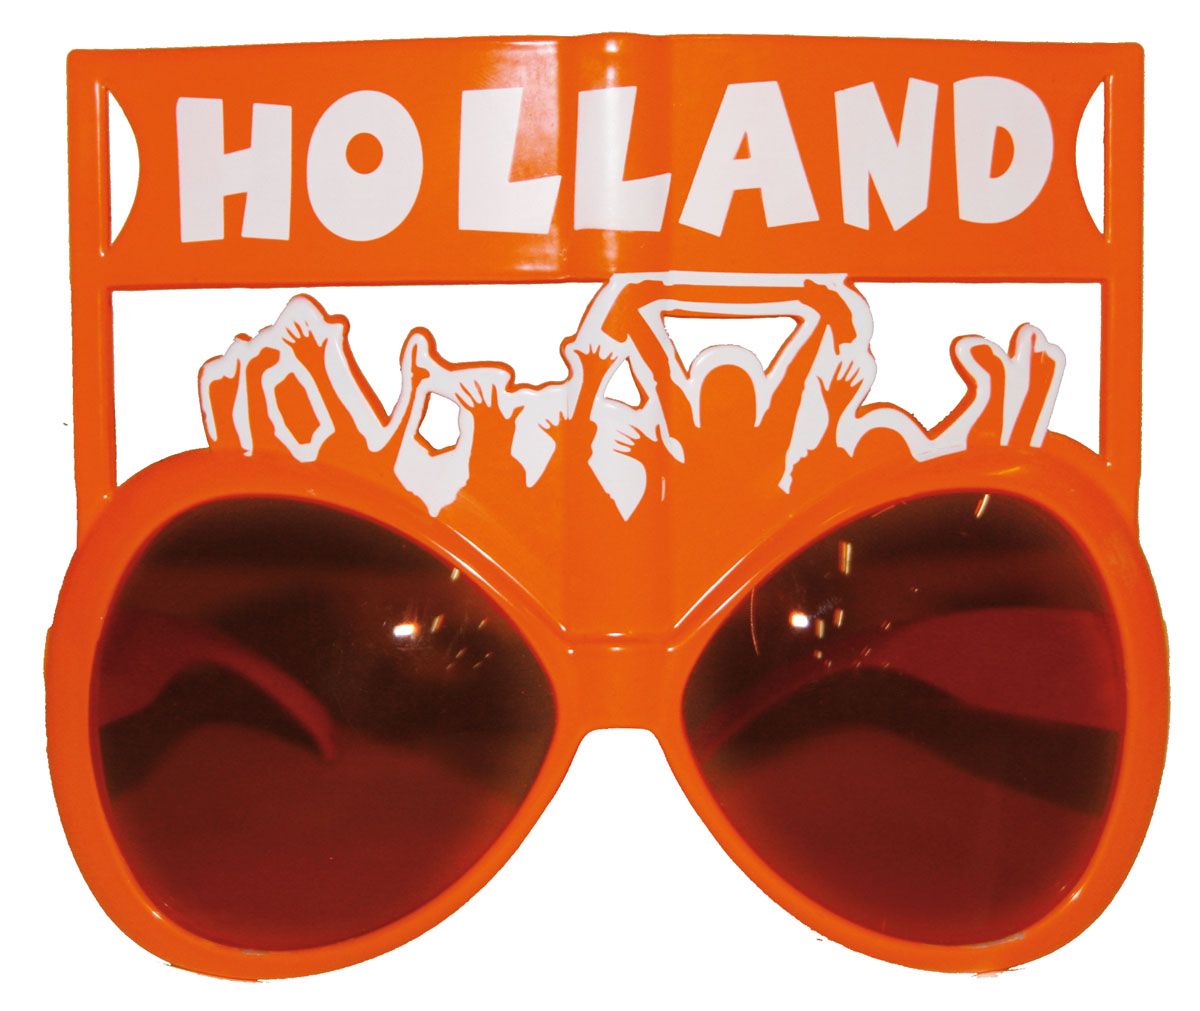 Holland spandoek feestbril oranje